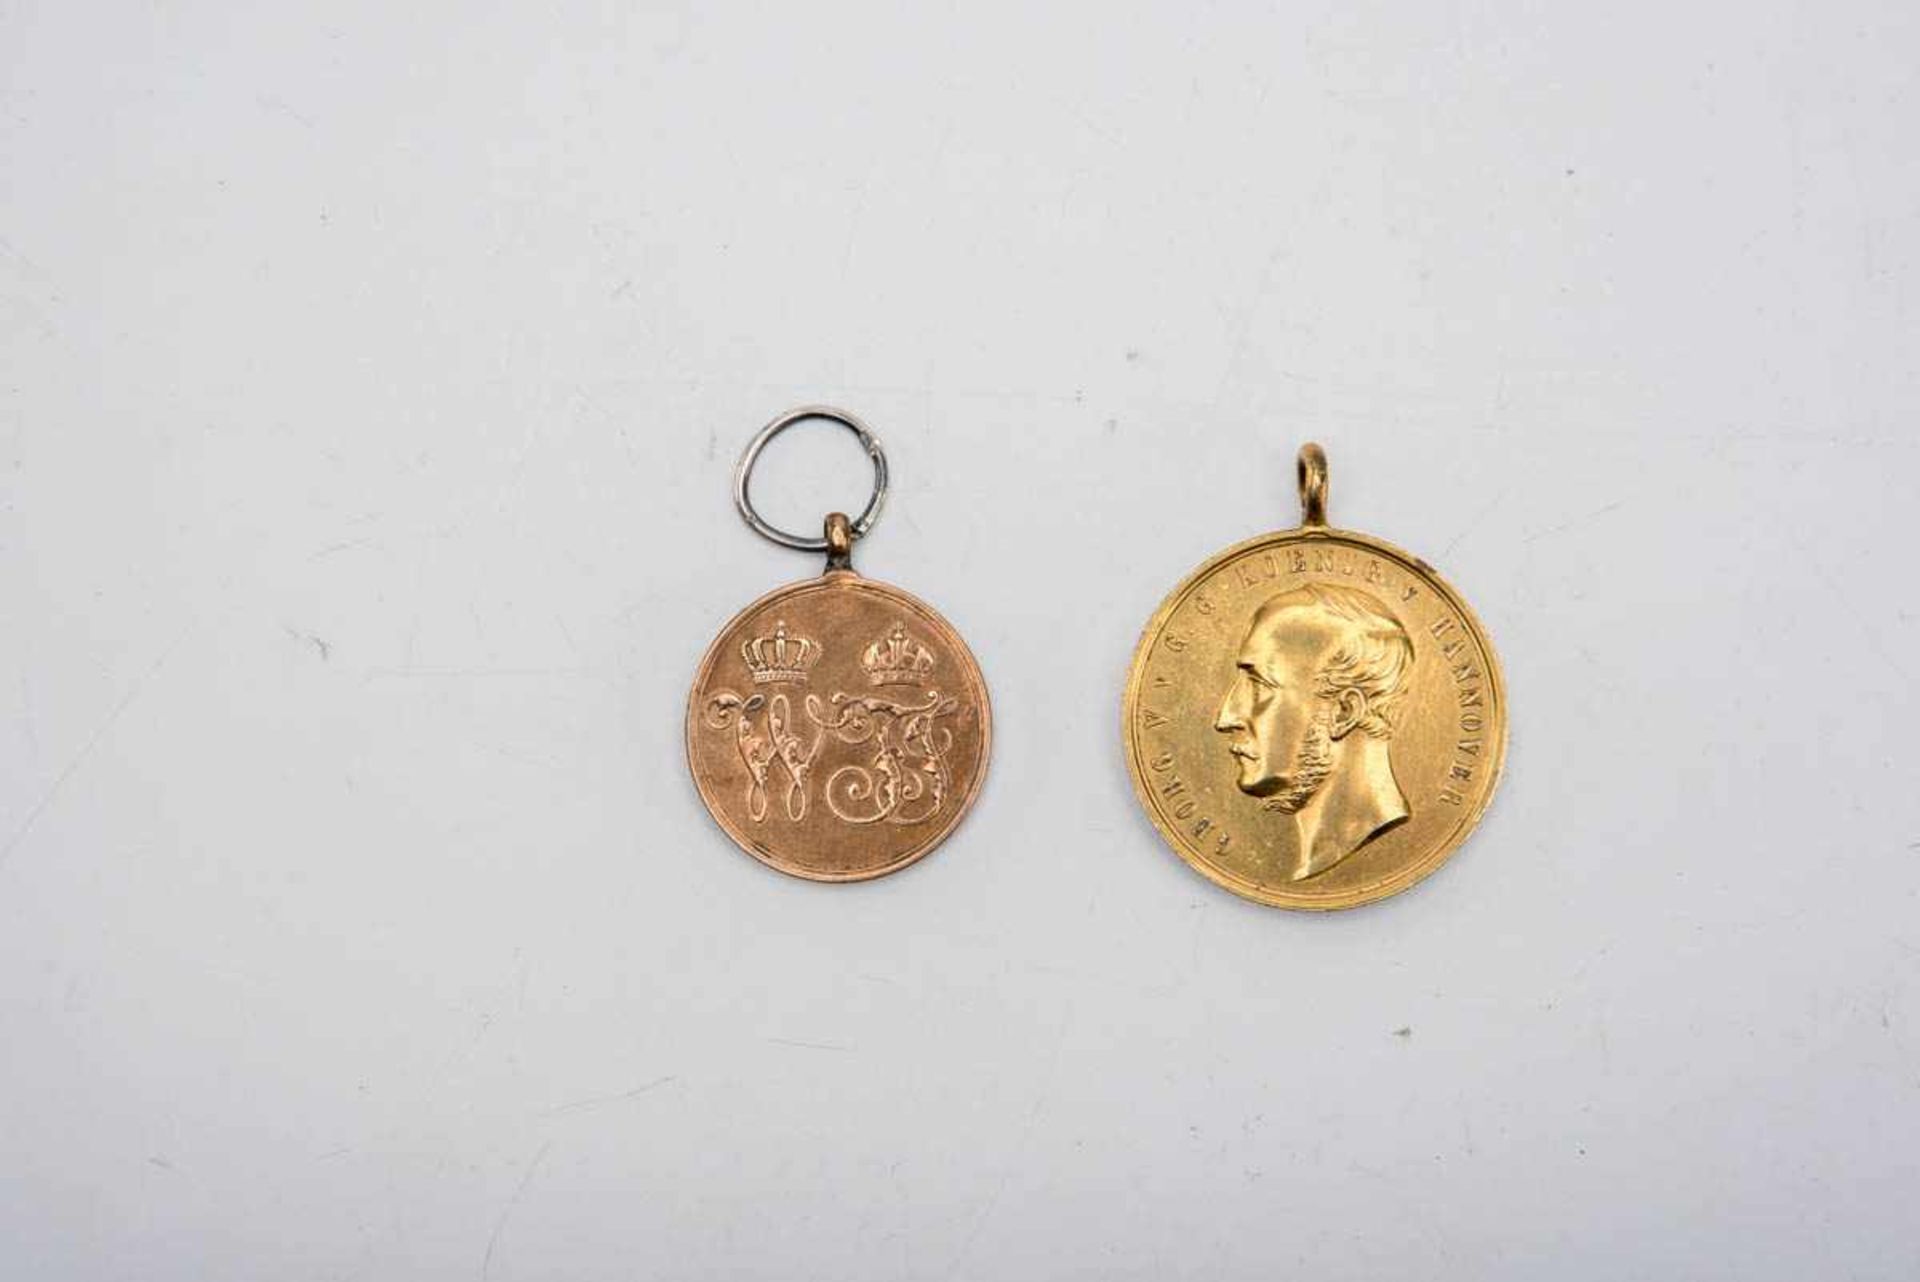 Langensalza-Medaille 1866 u. Preußen Kriegs-Denkmünze 1864. 1a. Langensalza-Medaille 1866 des Wiener